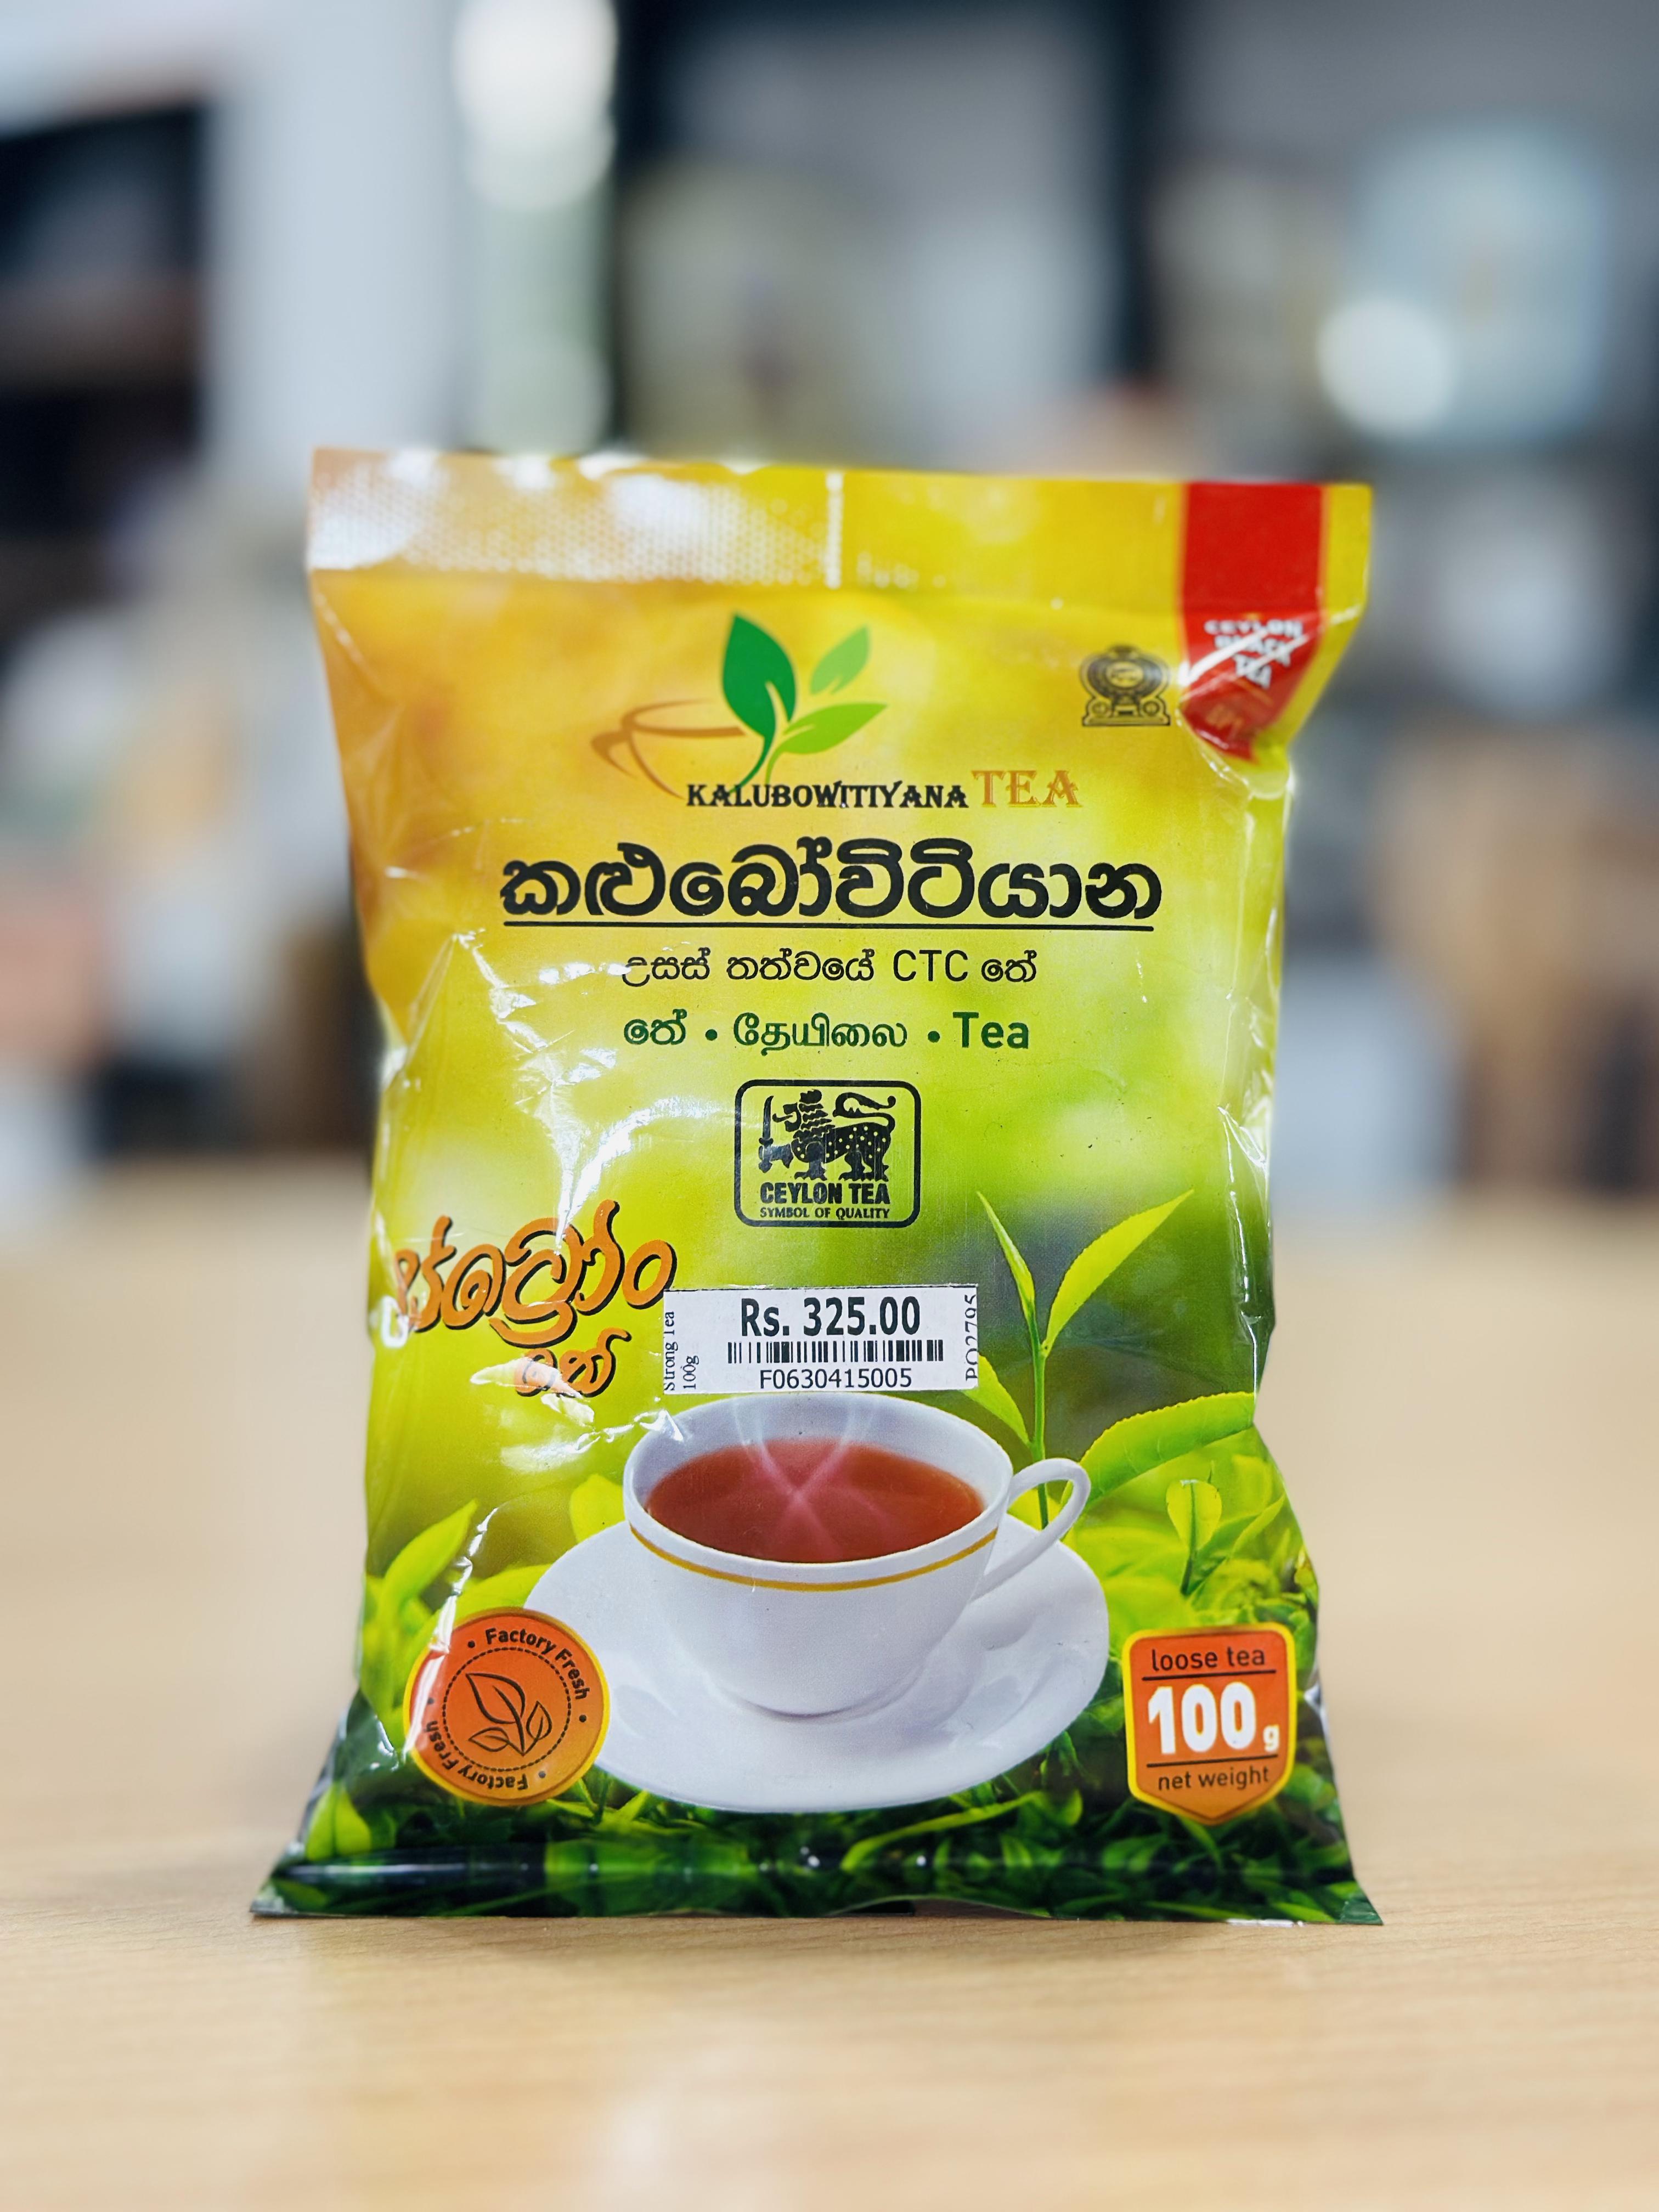 KaluBowitiyana Ceylon Strong Tea